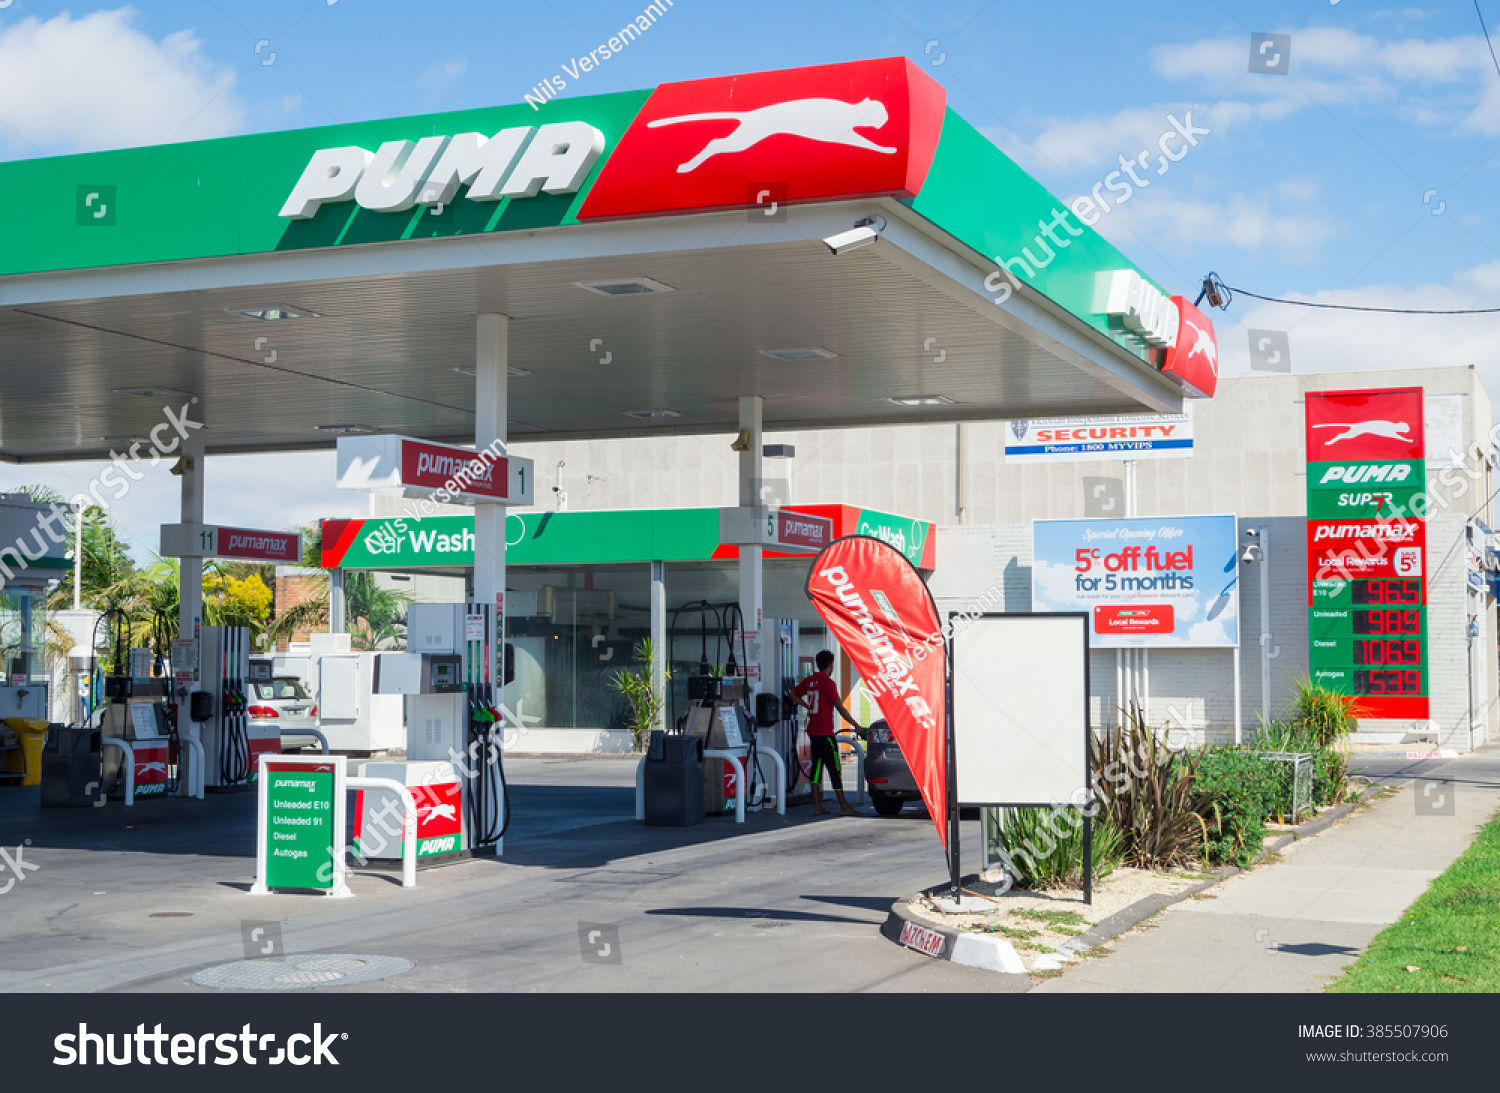 puma energy stock